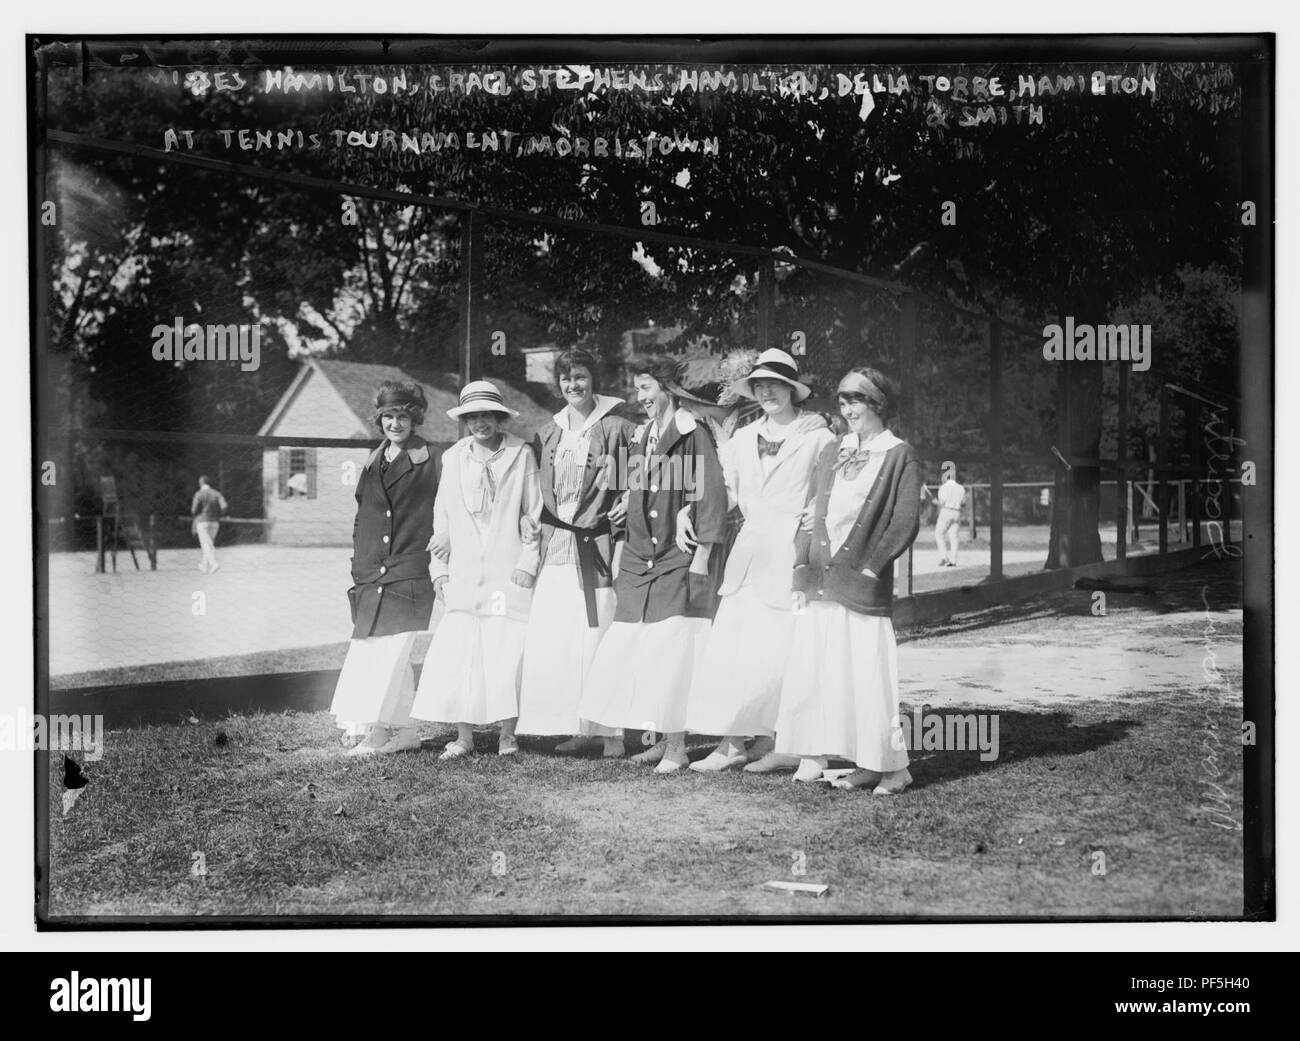 At tennis tournament, Morristown - Misses Hamilton, Crag, Stephens, Hamilton, (Gertrude) Della Torre, Hamilton and Smith Stock Photo